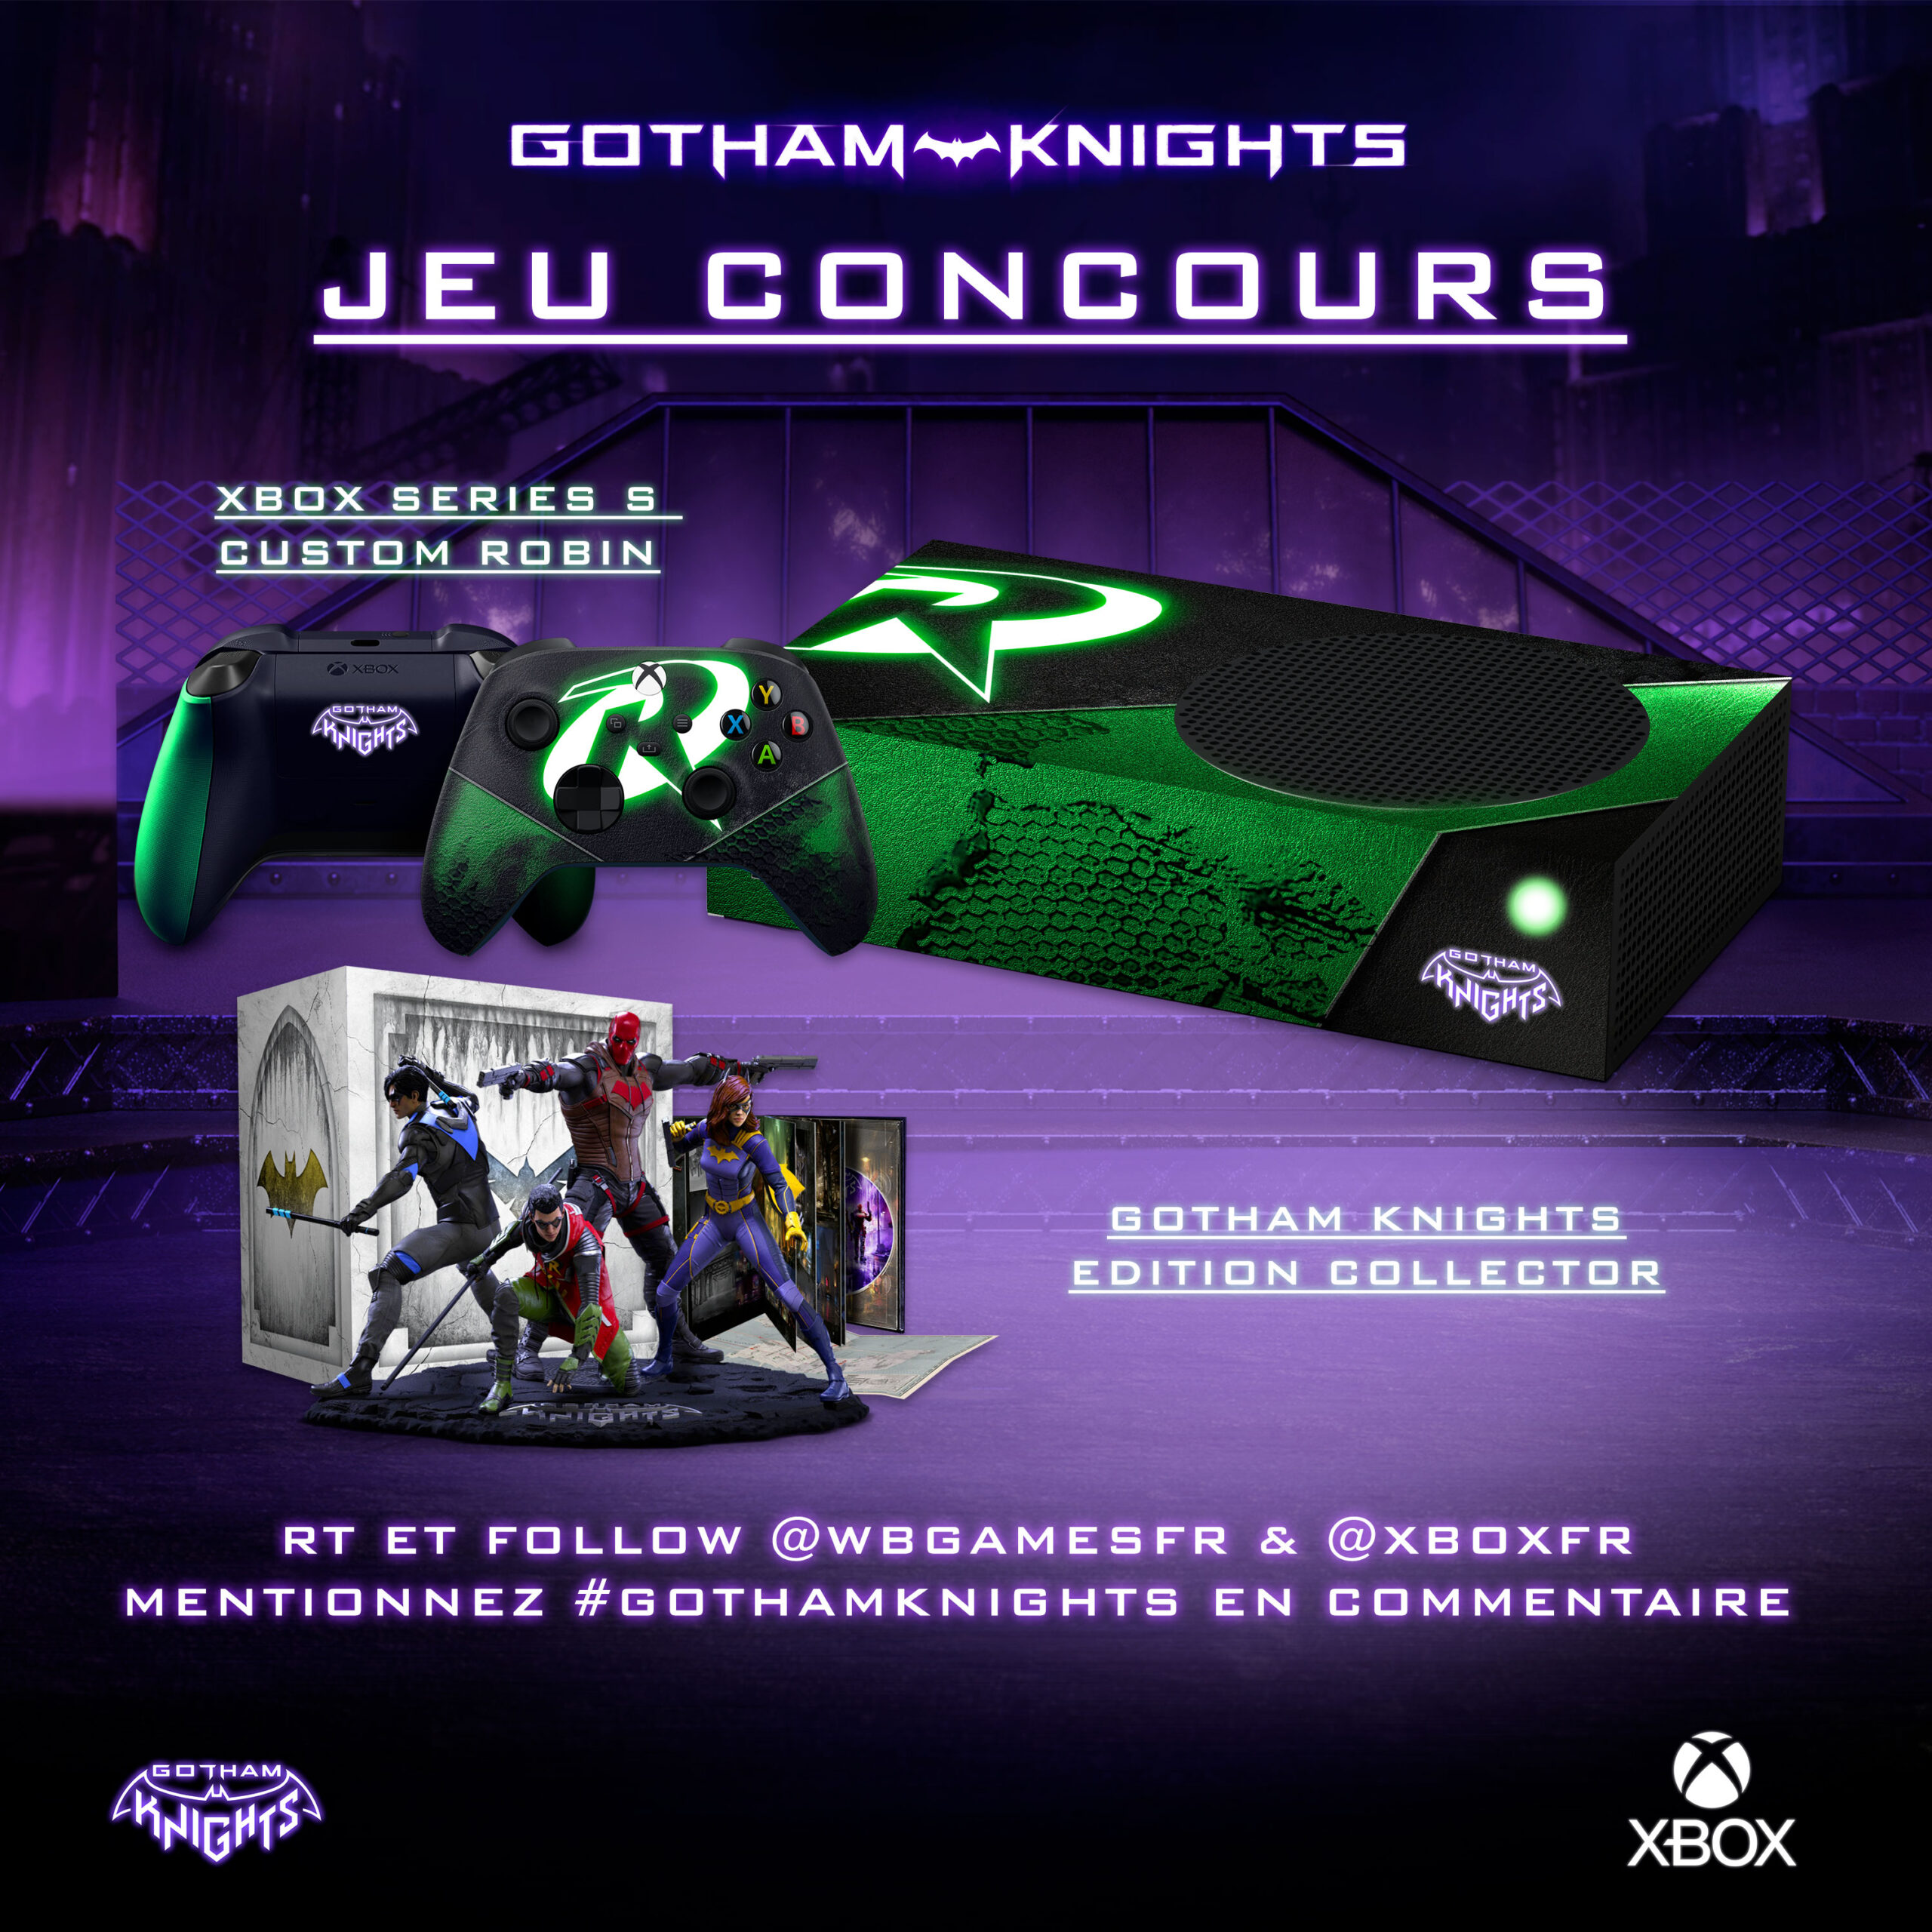 Представили еще 2 уникальные Xbox Series S - в стиле Робина и Красного Колпака из Gotham Knights: с сайта NEWXBOXONE.RU